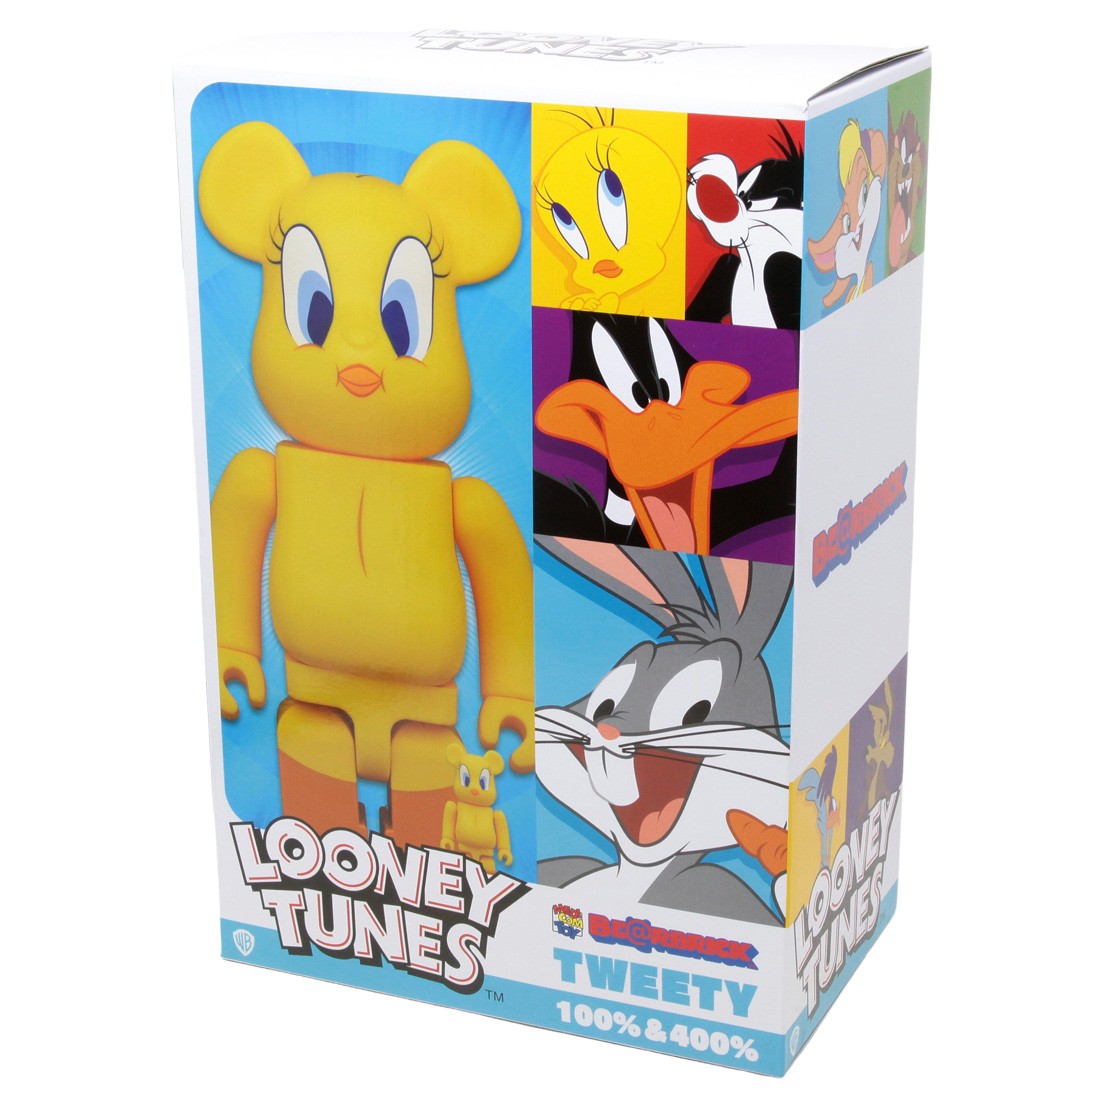 Medicom Looney Tunes Tweety 2021 100% 400% Bearbrick Figure Set (yellow)